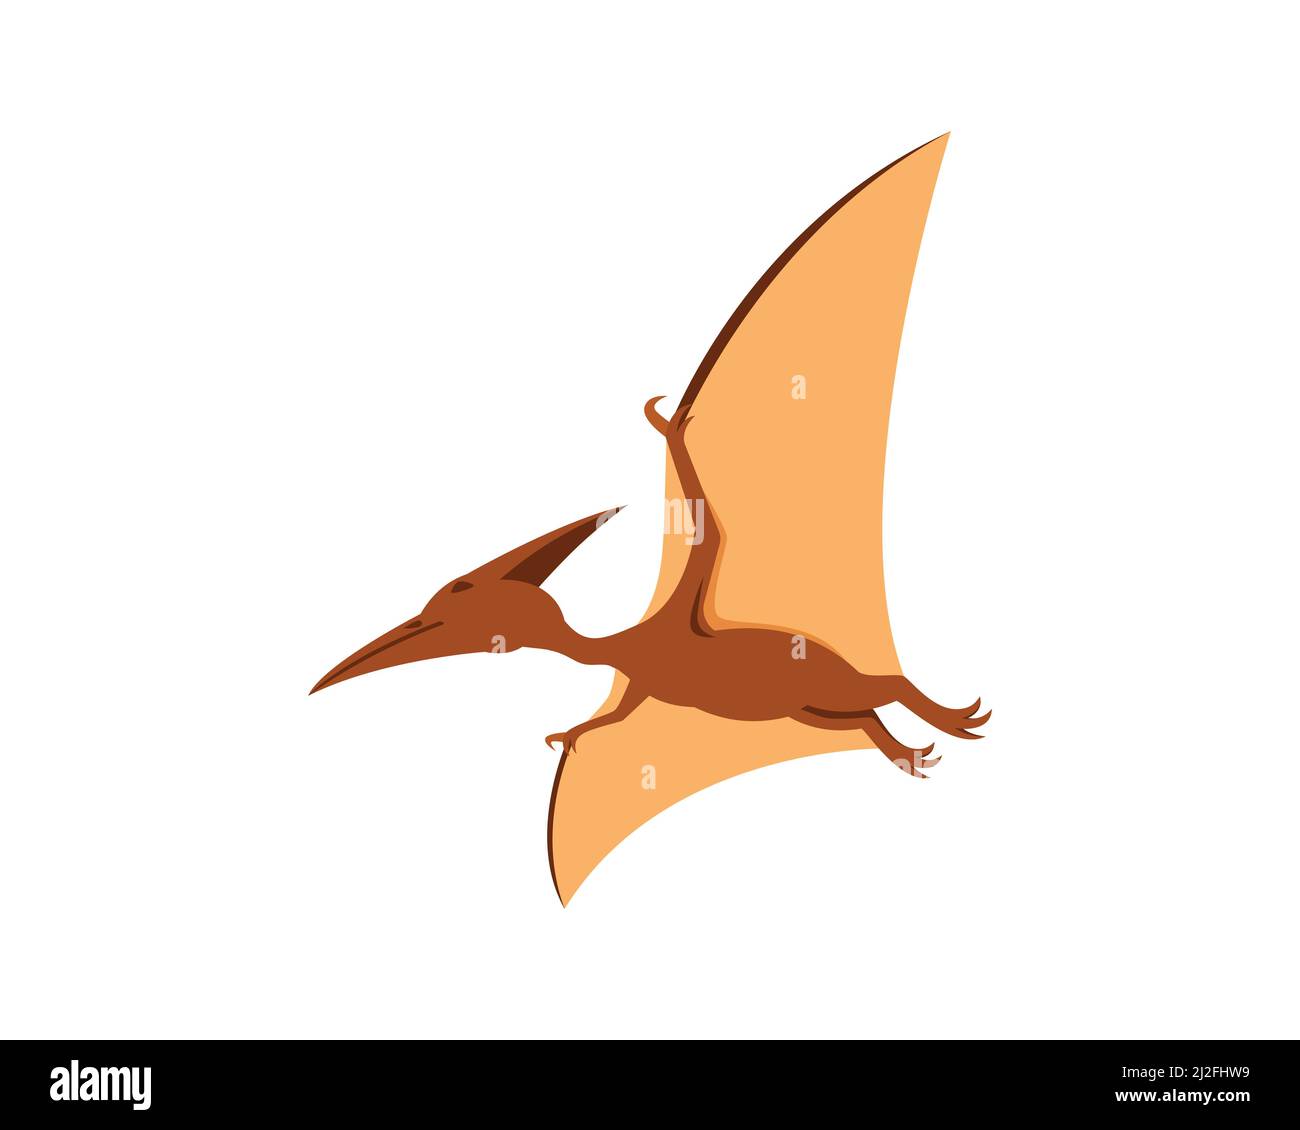 Detailed Flying Pterodactyl the Jurassic Animal Illustration Vector Stock Vector